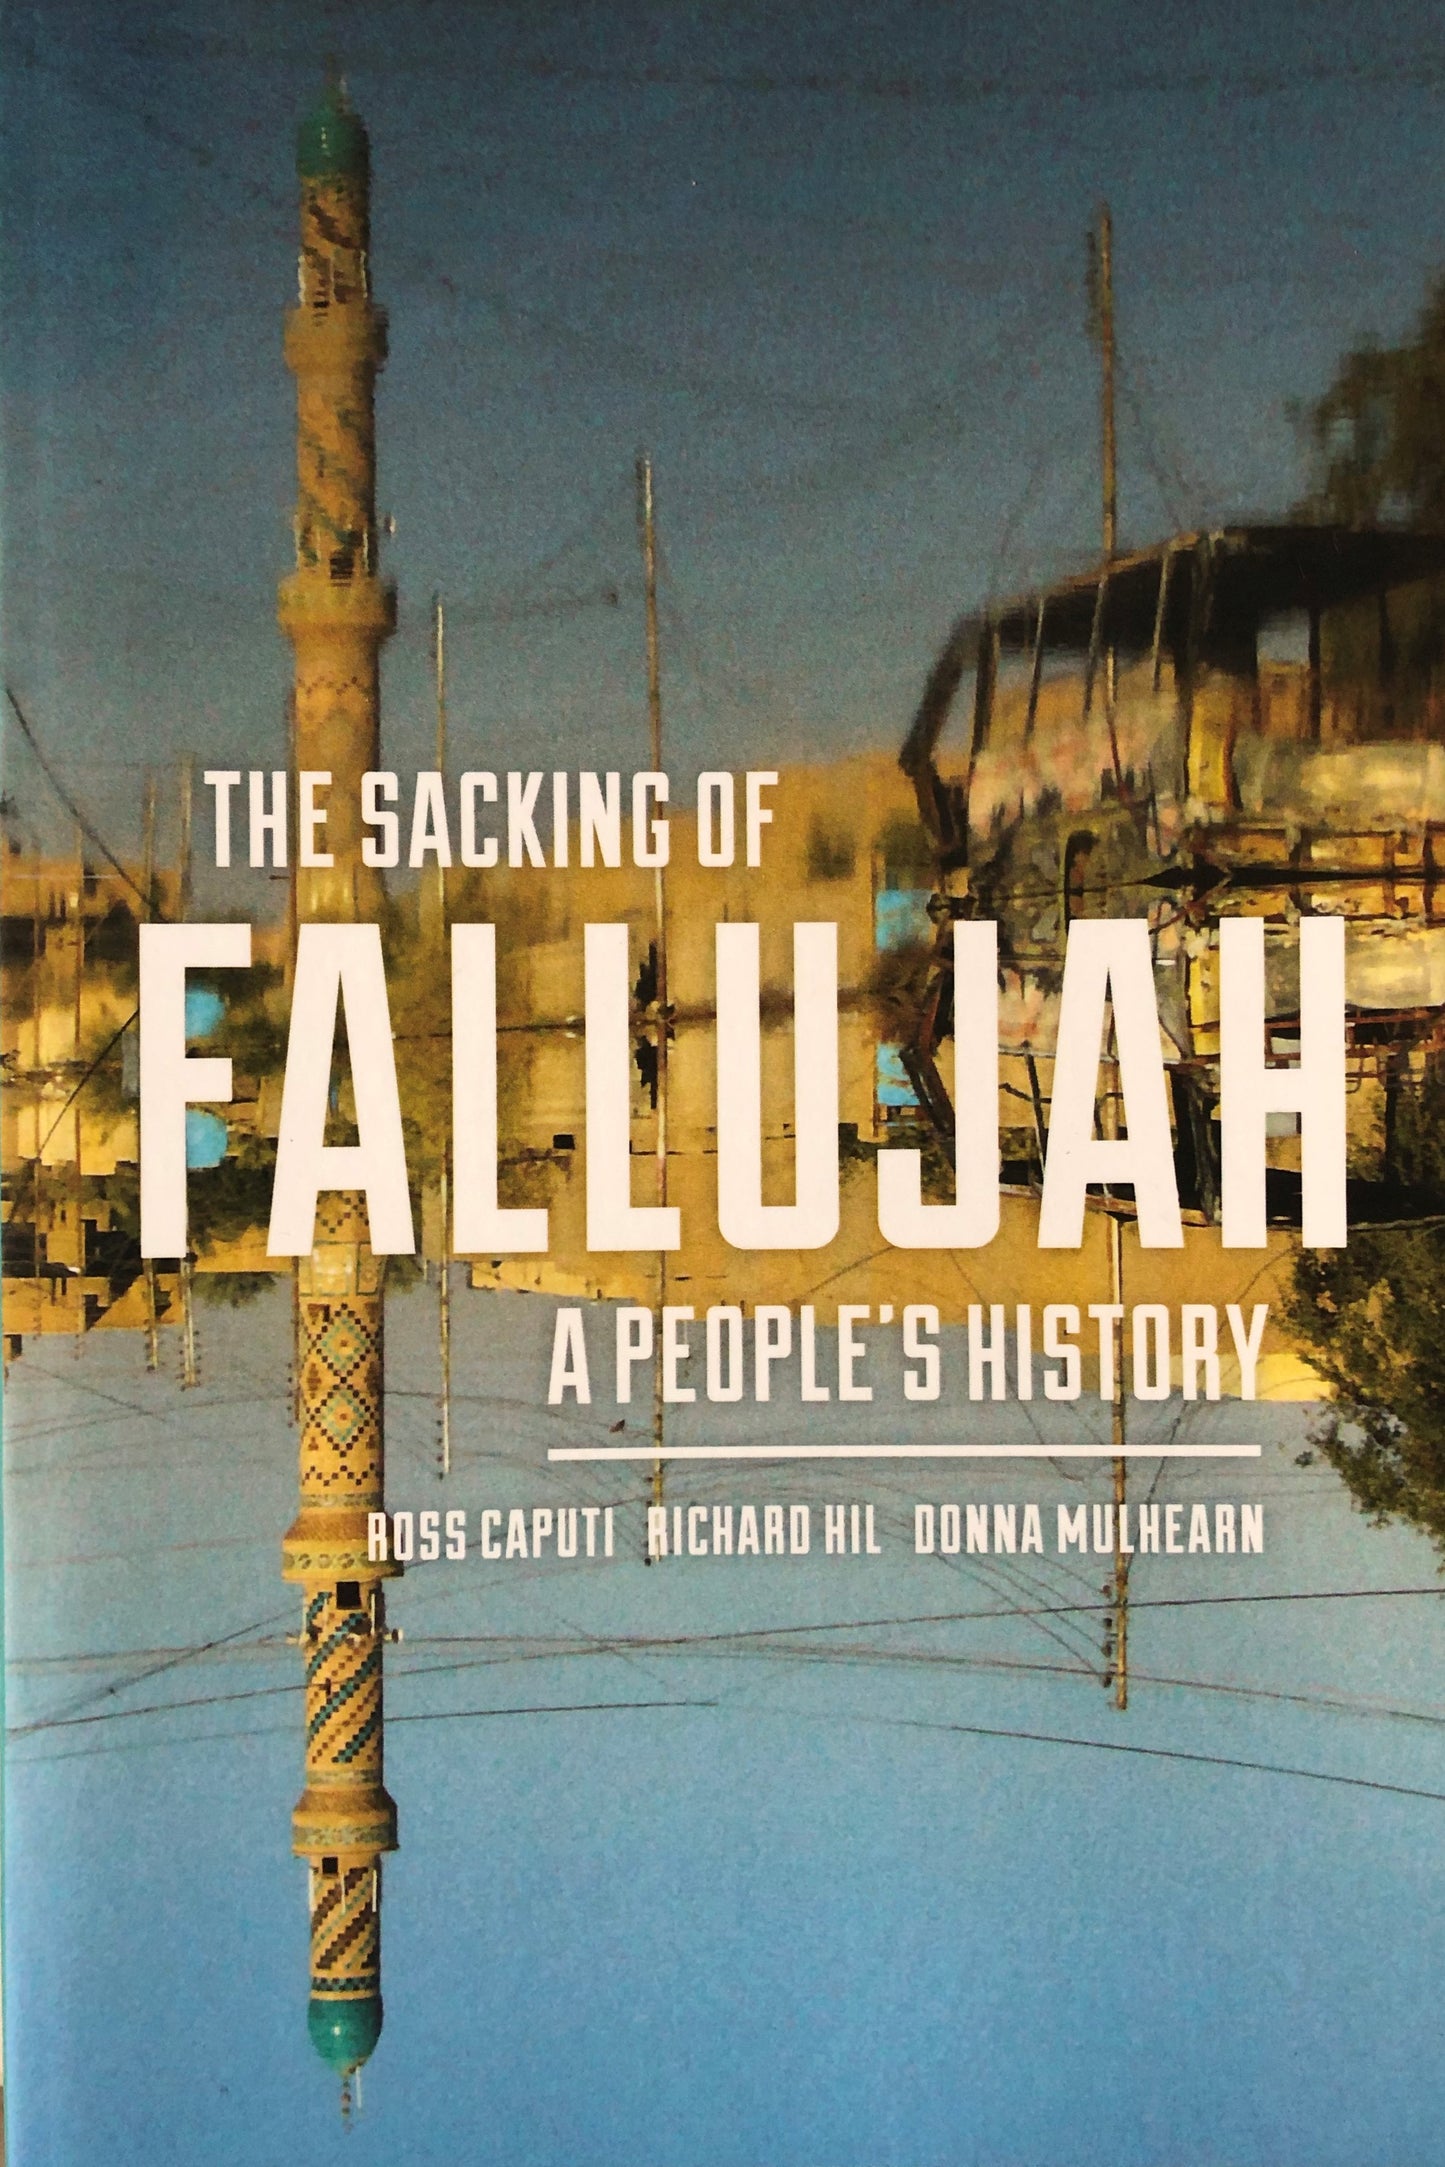 The Sacking of Fallujah